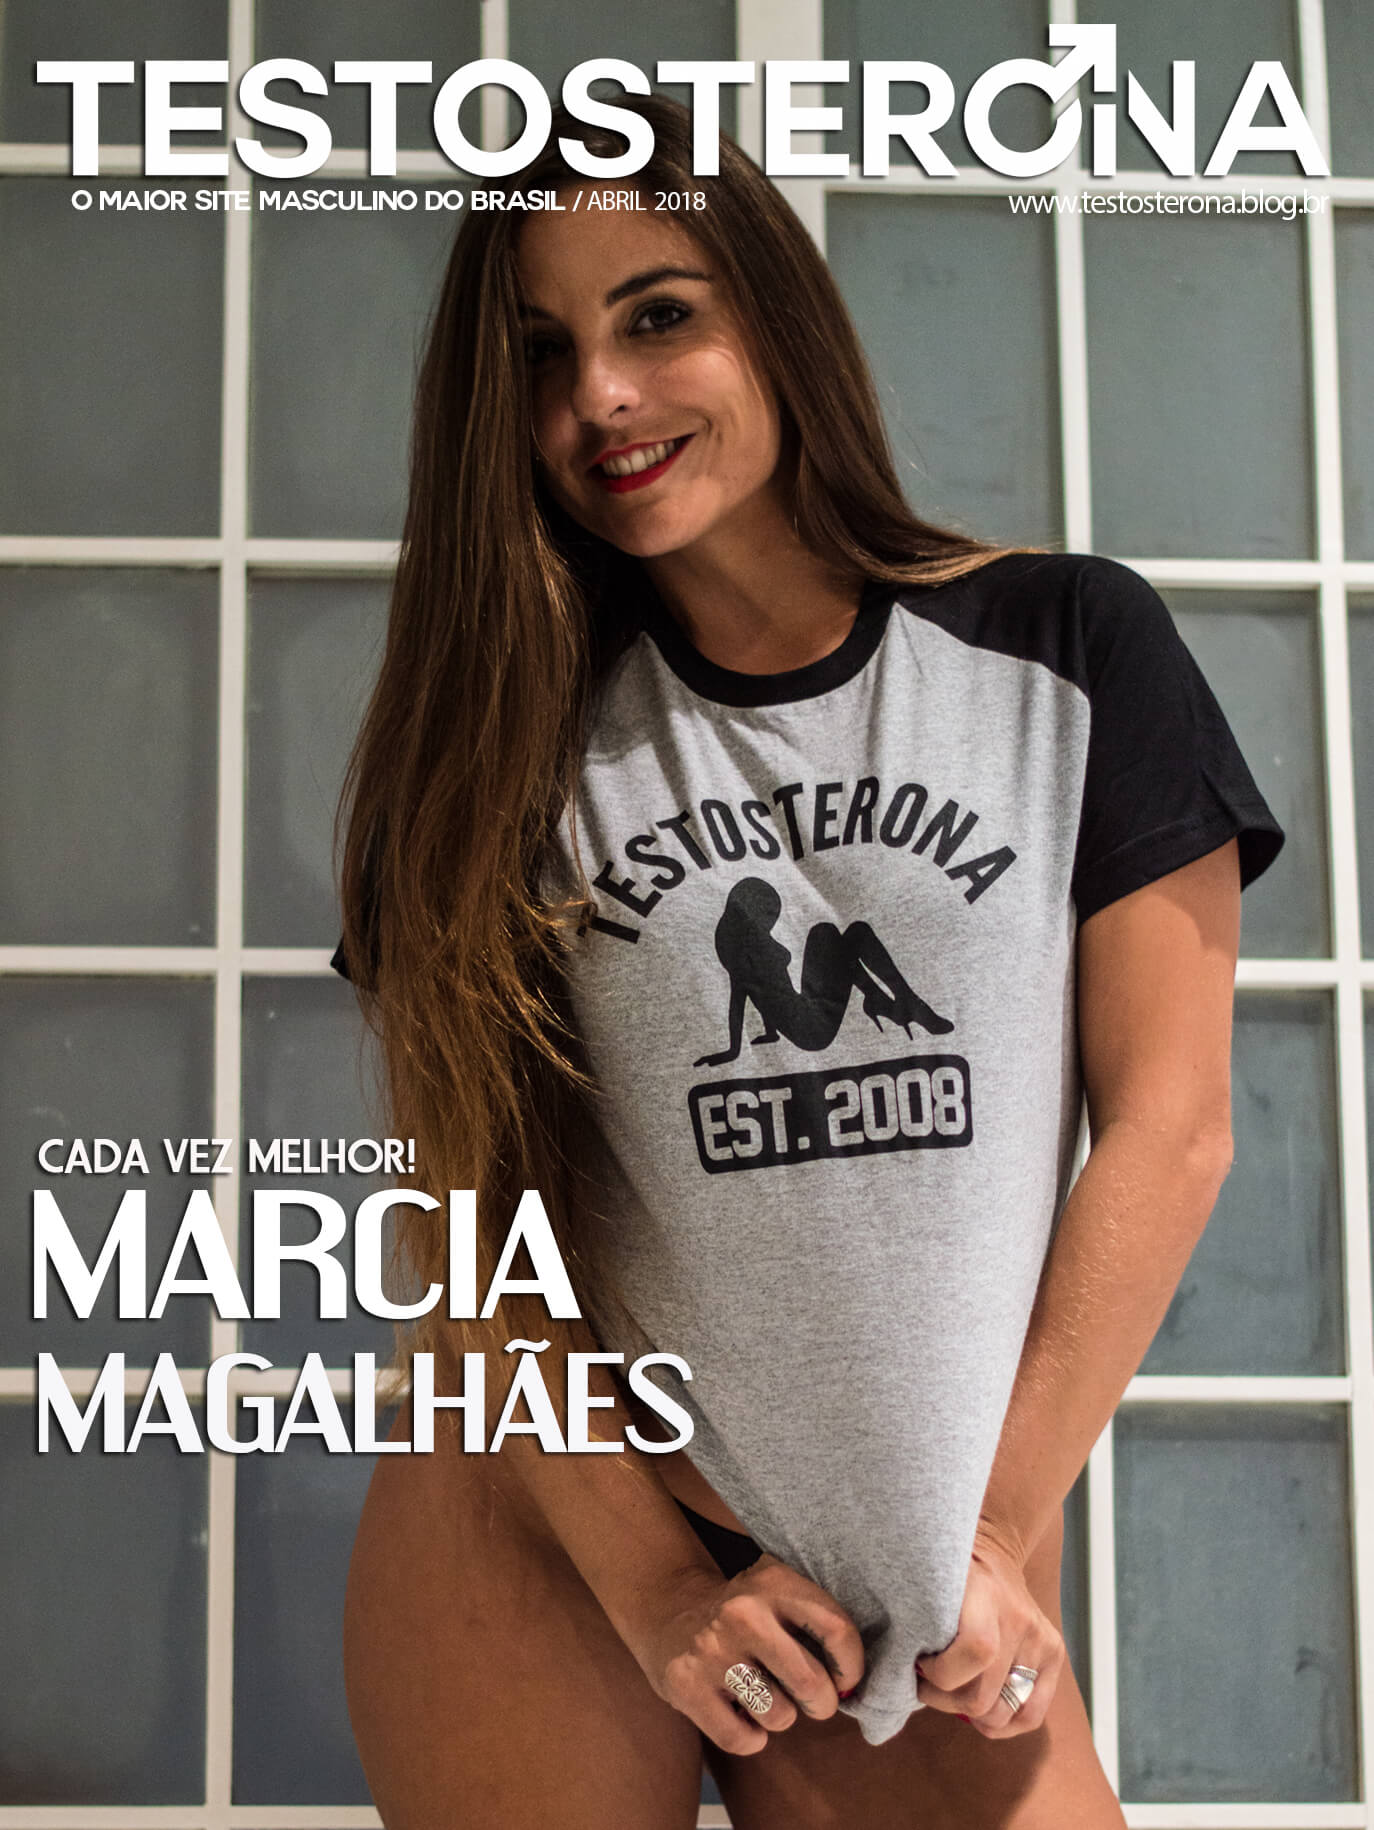 Márcia Magalhães Testosterona Girls